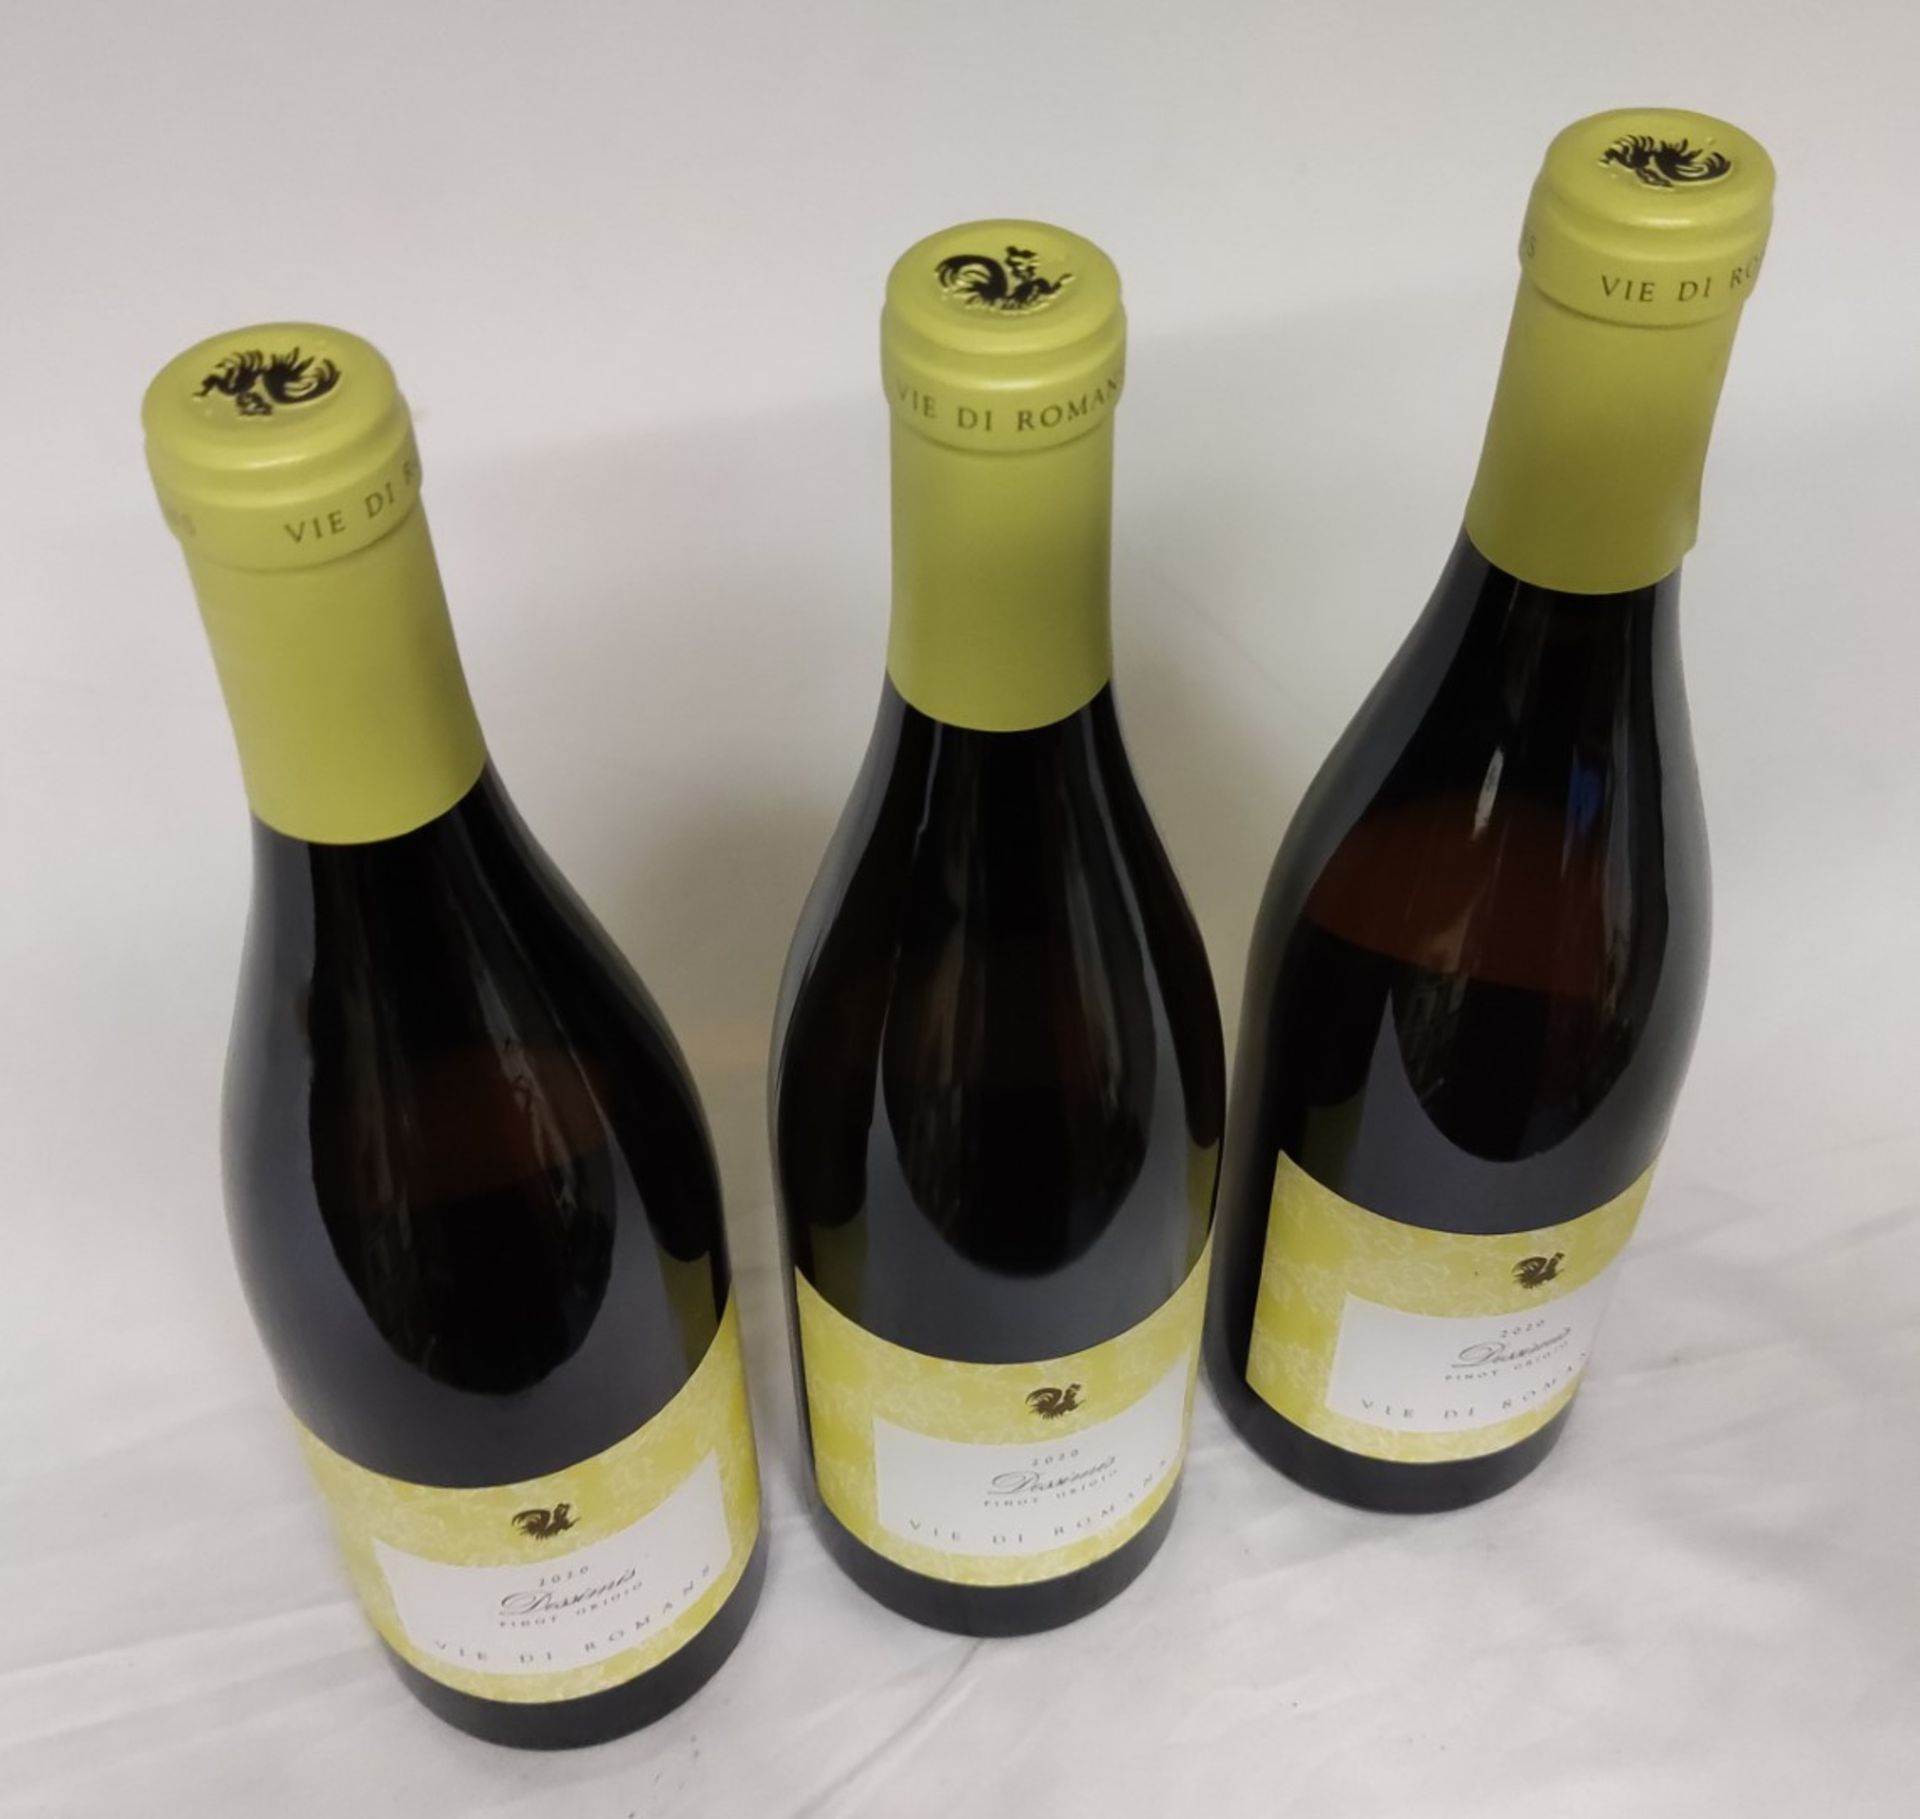 3 x Bottles of 2020 Vie Di Romans Dessimis Pinot Grigio White Wine - Retail Price £90 - Ref: WAS362/ - Image 4 of 6